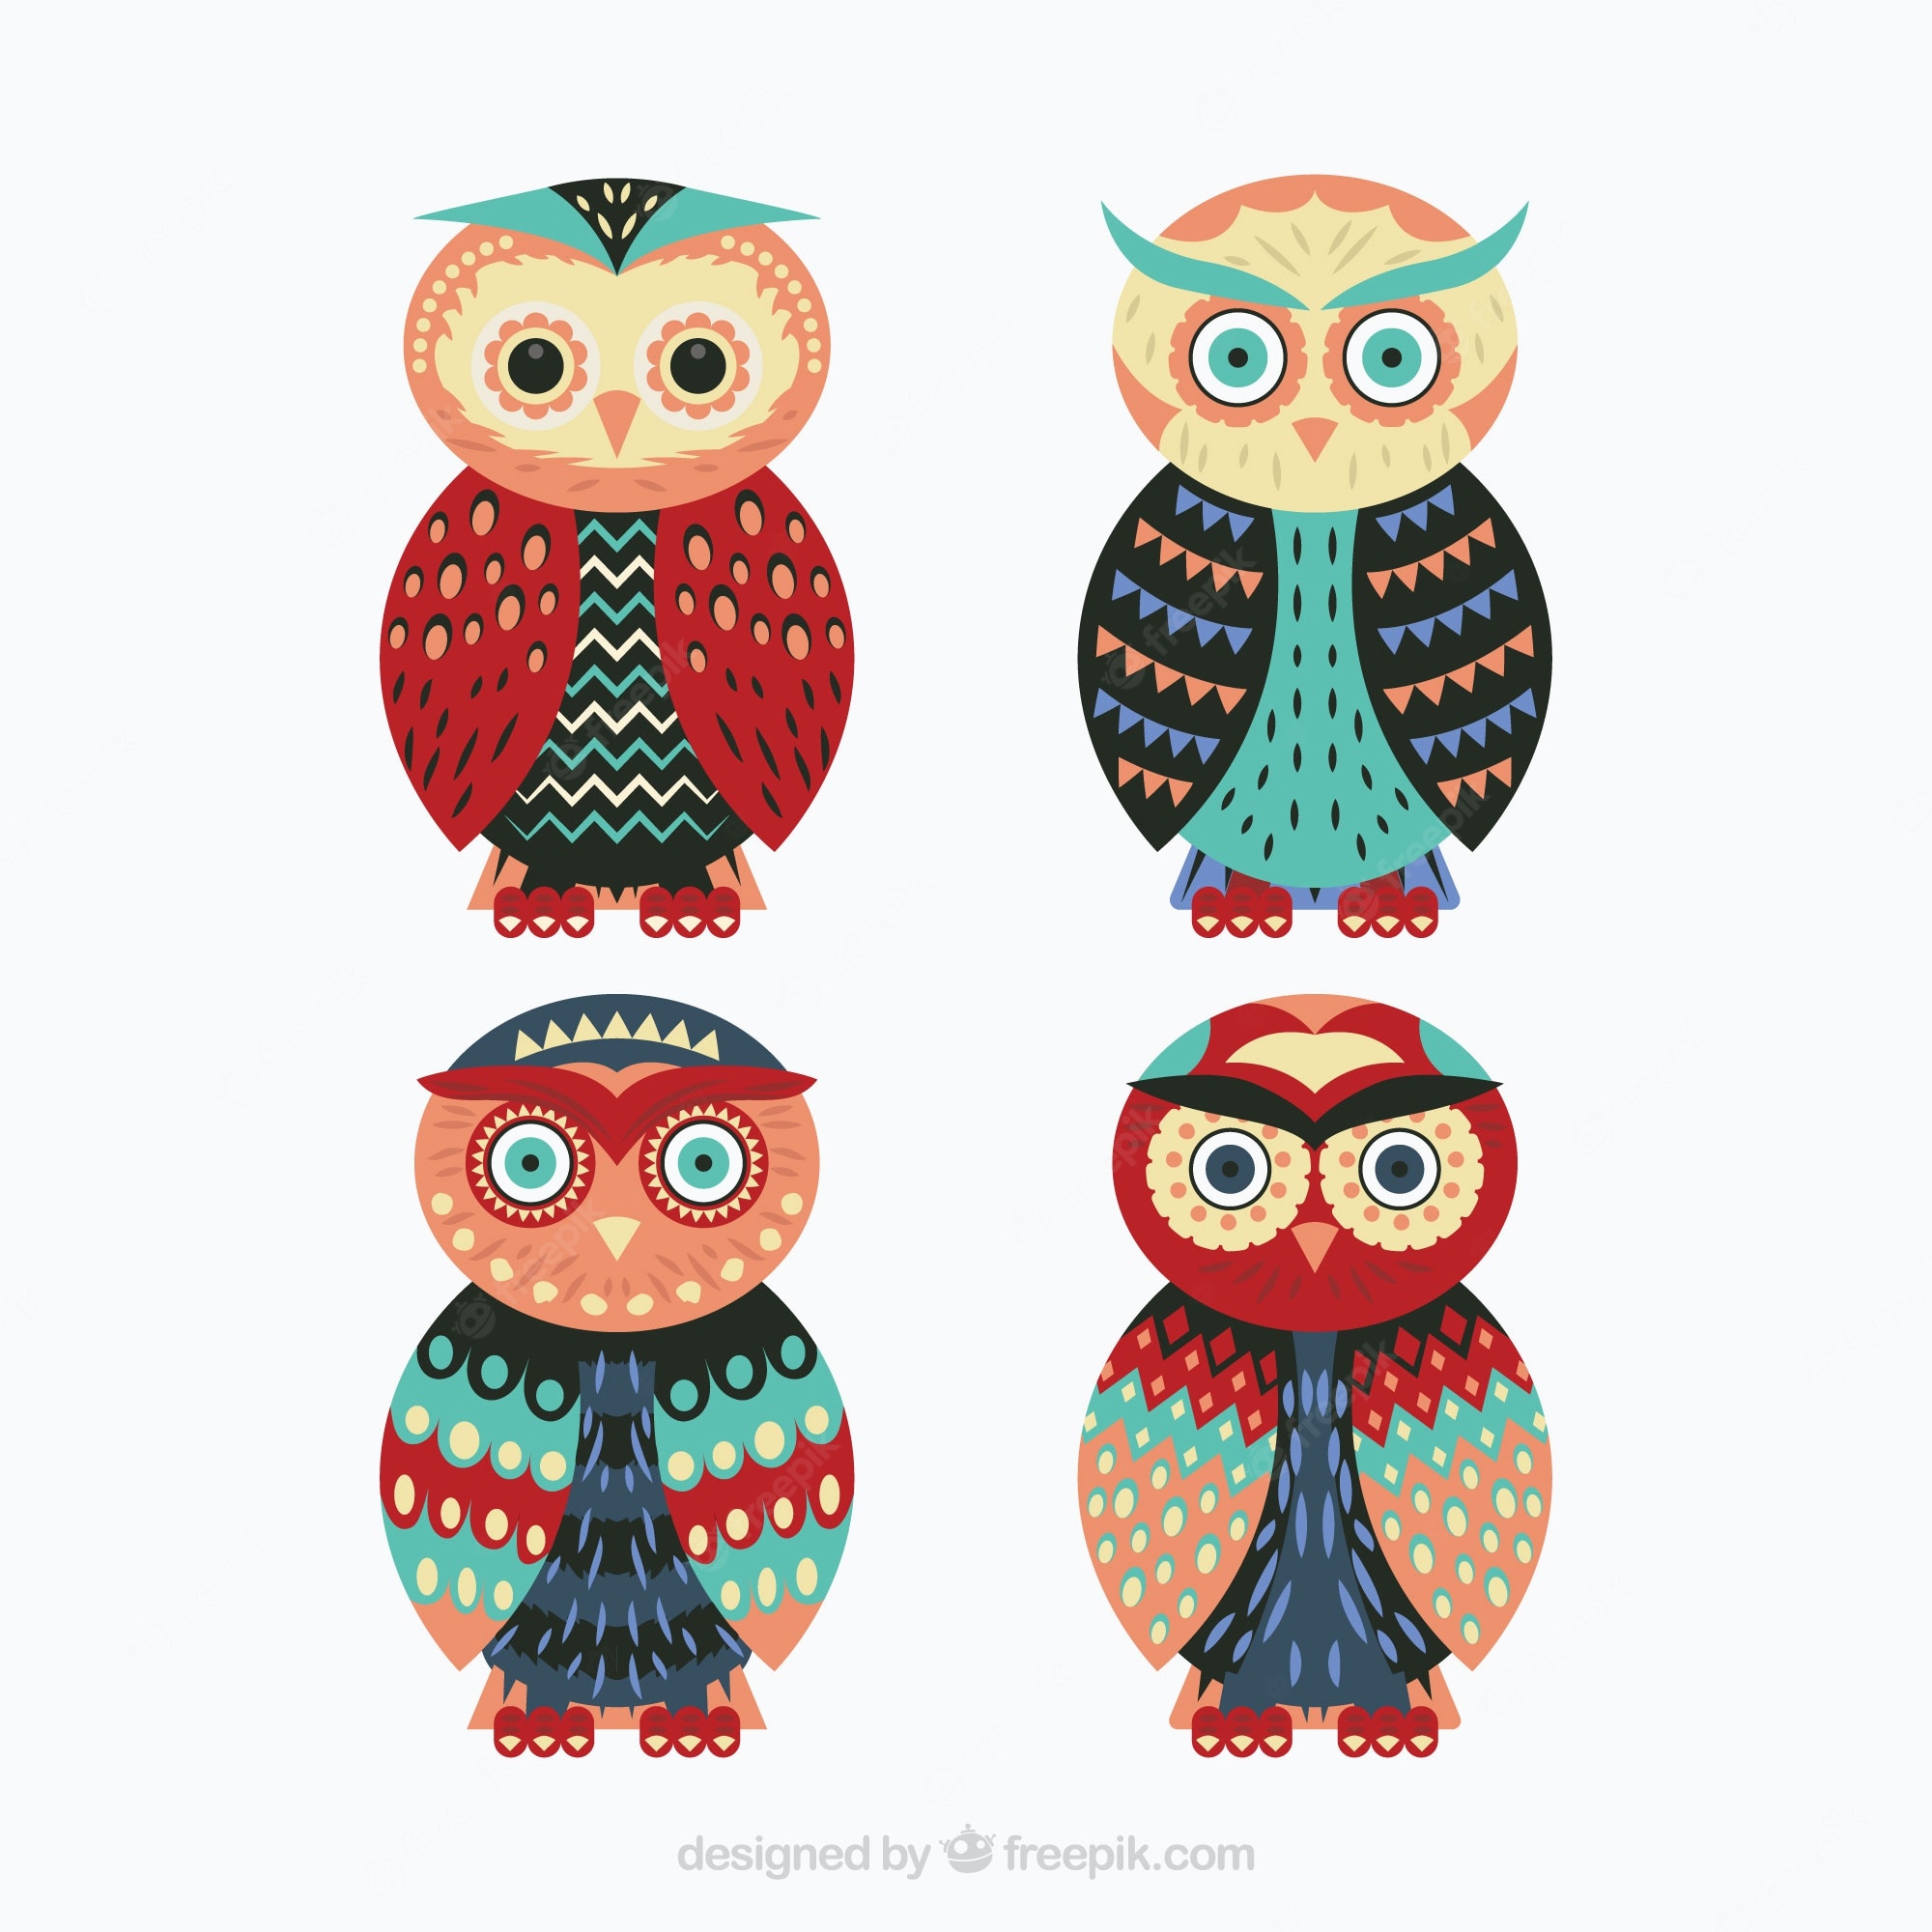 Tribal Owl Wallpapers